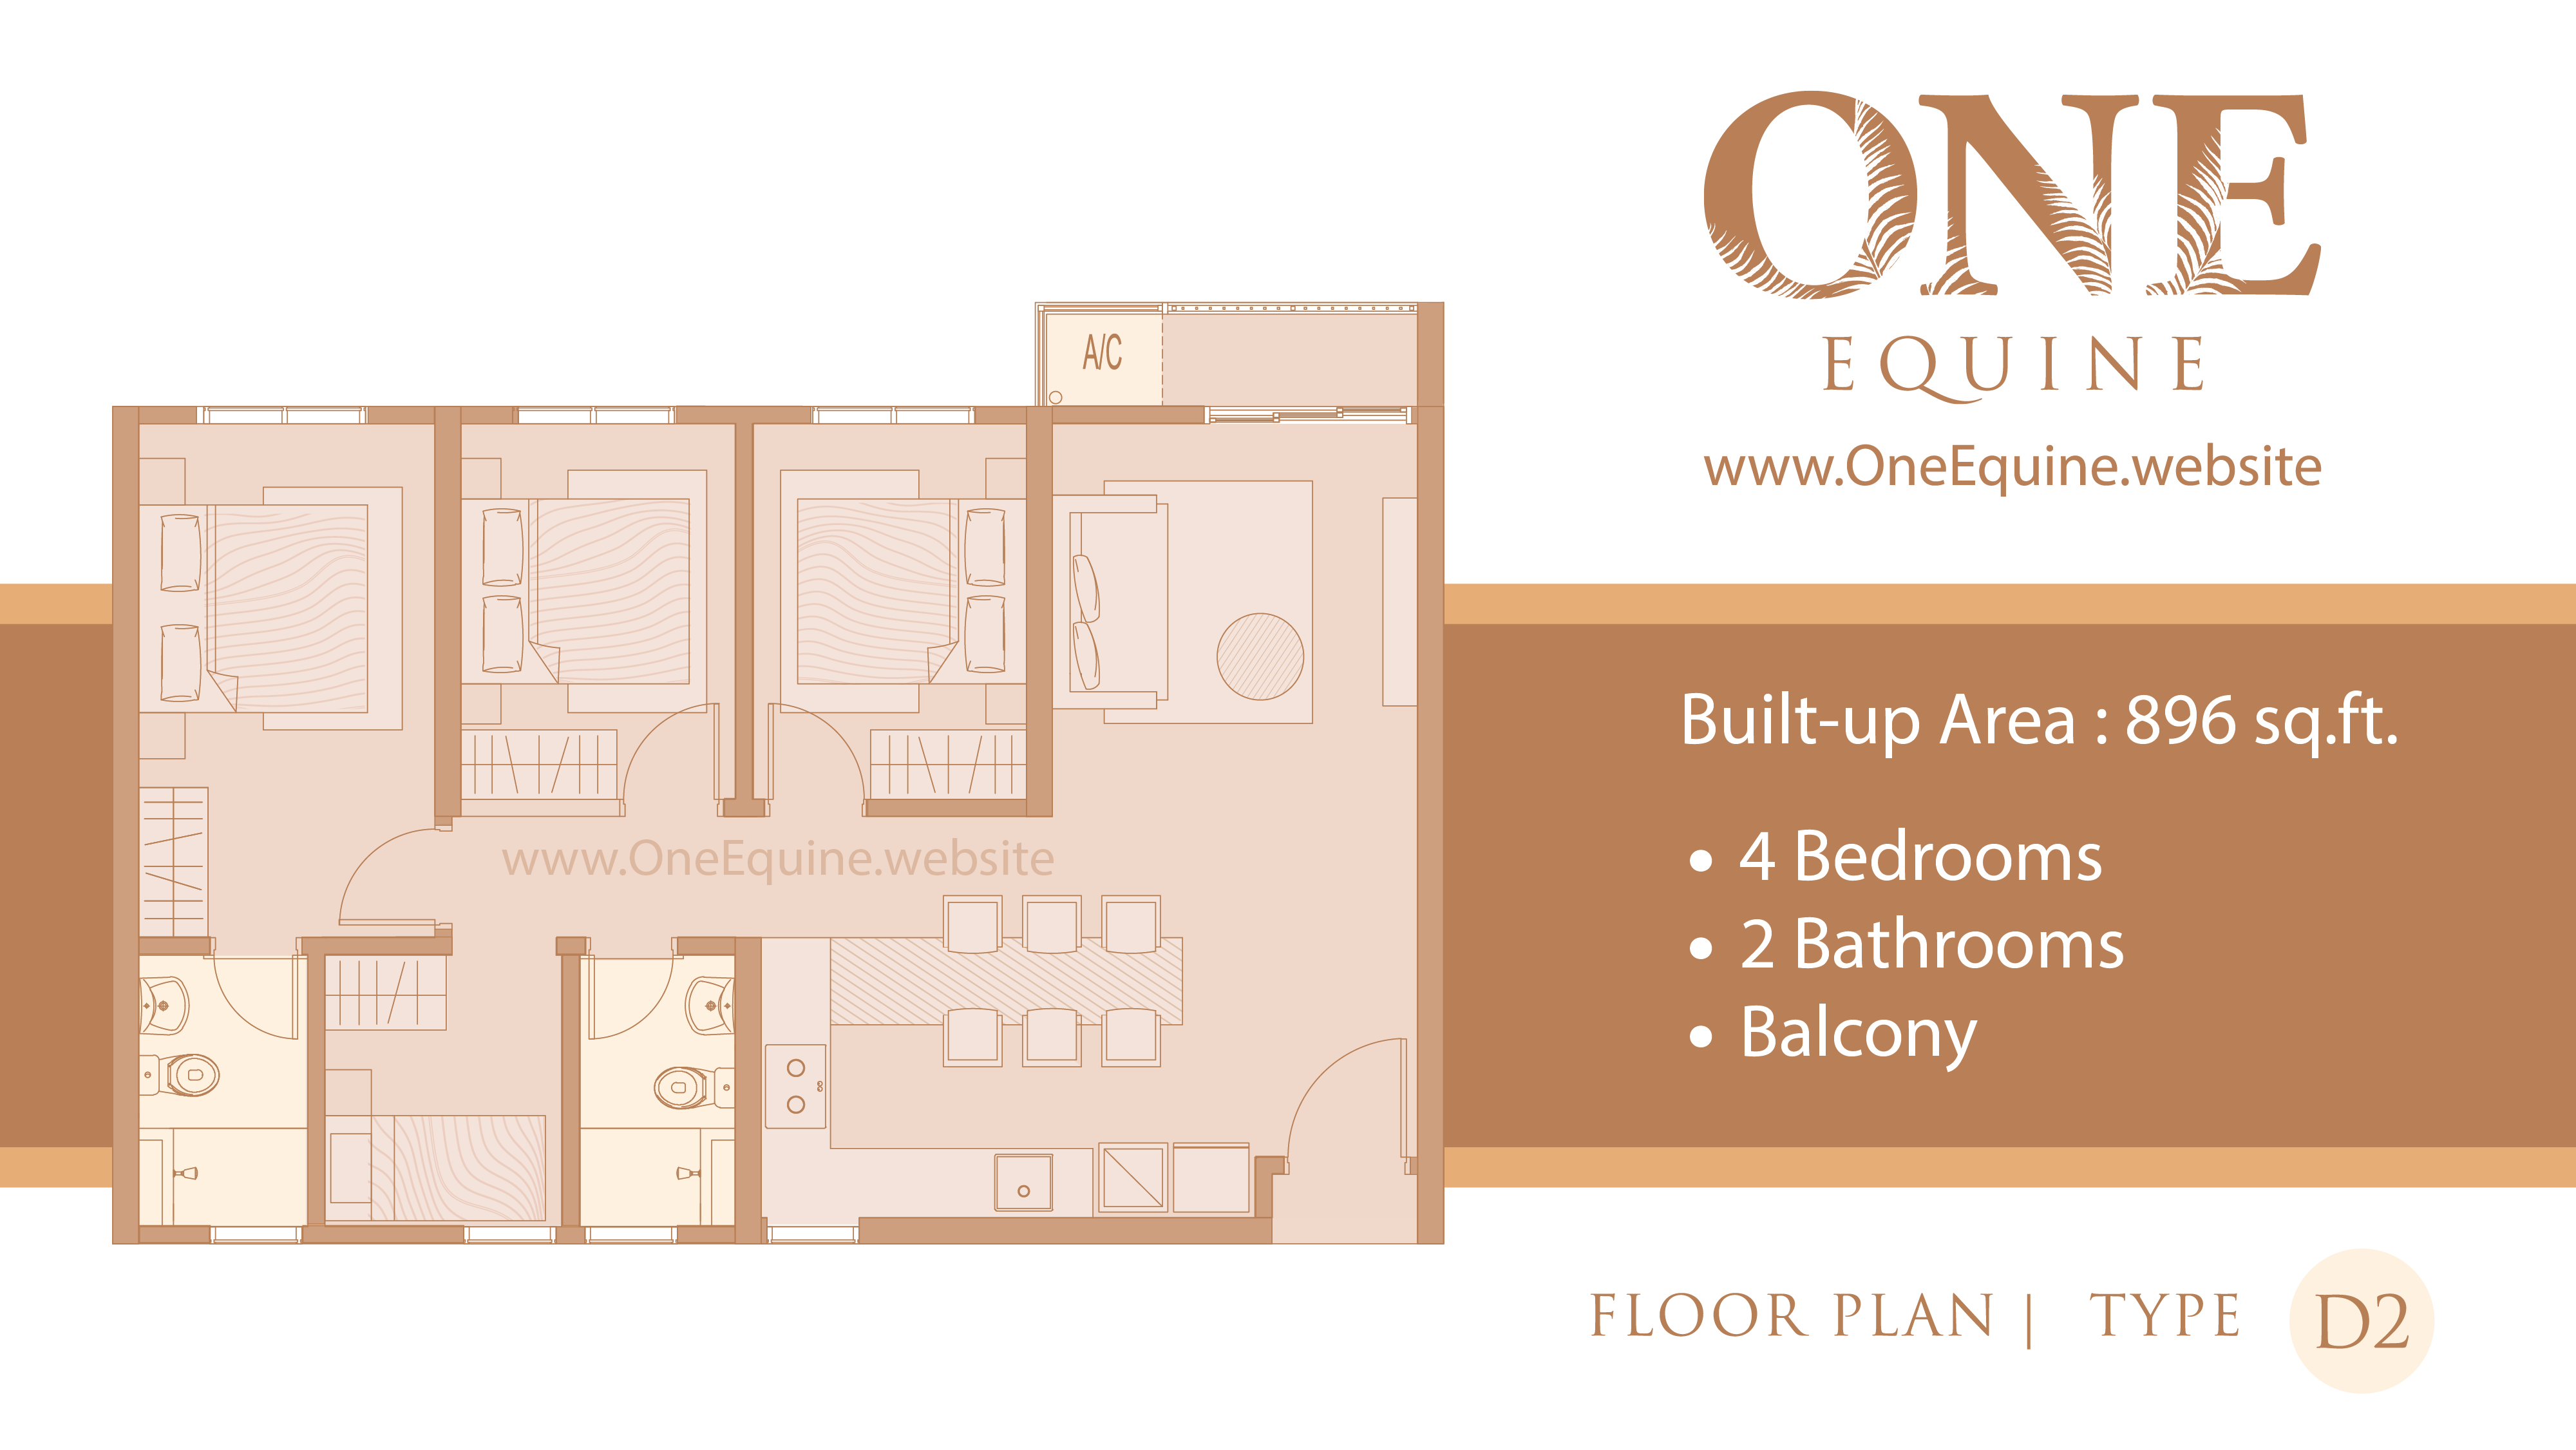 One Equine Park Seri Kembangan - Serviced Apartment 4 Bedrooms 2 Bathrooms Balcony - Floor Plan Type D2 - 896 sqft